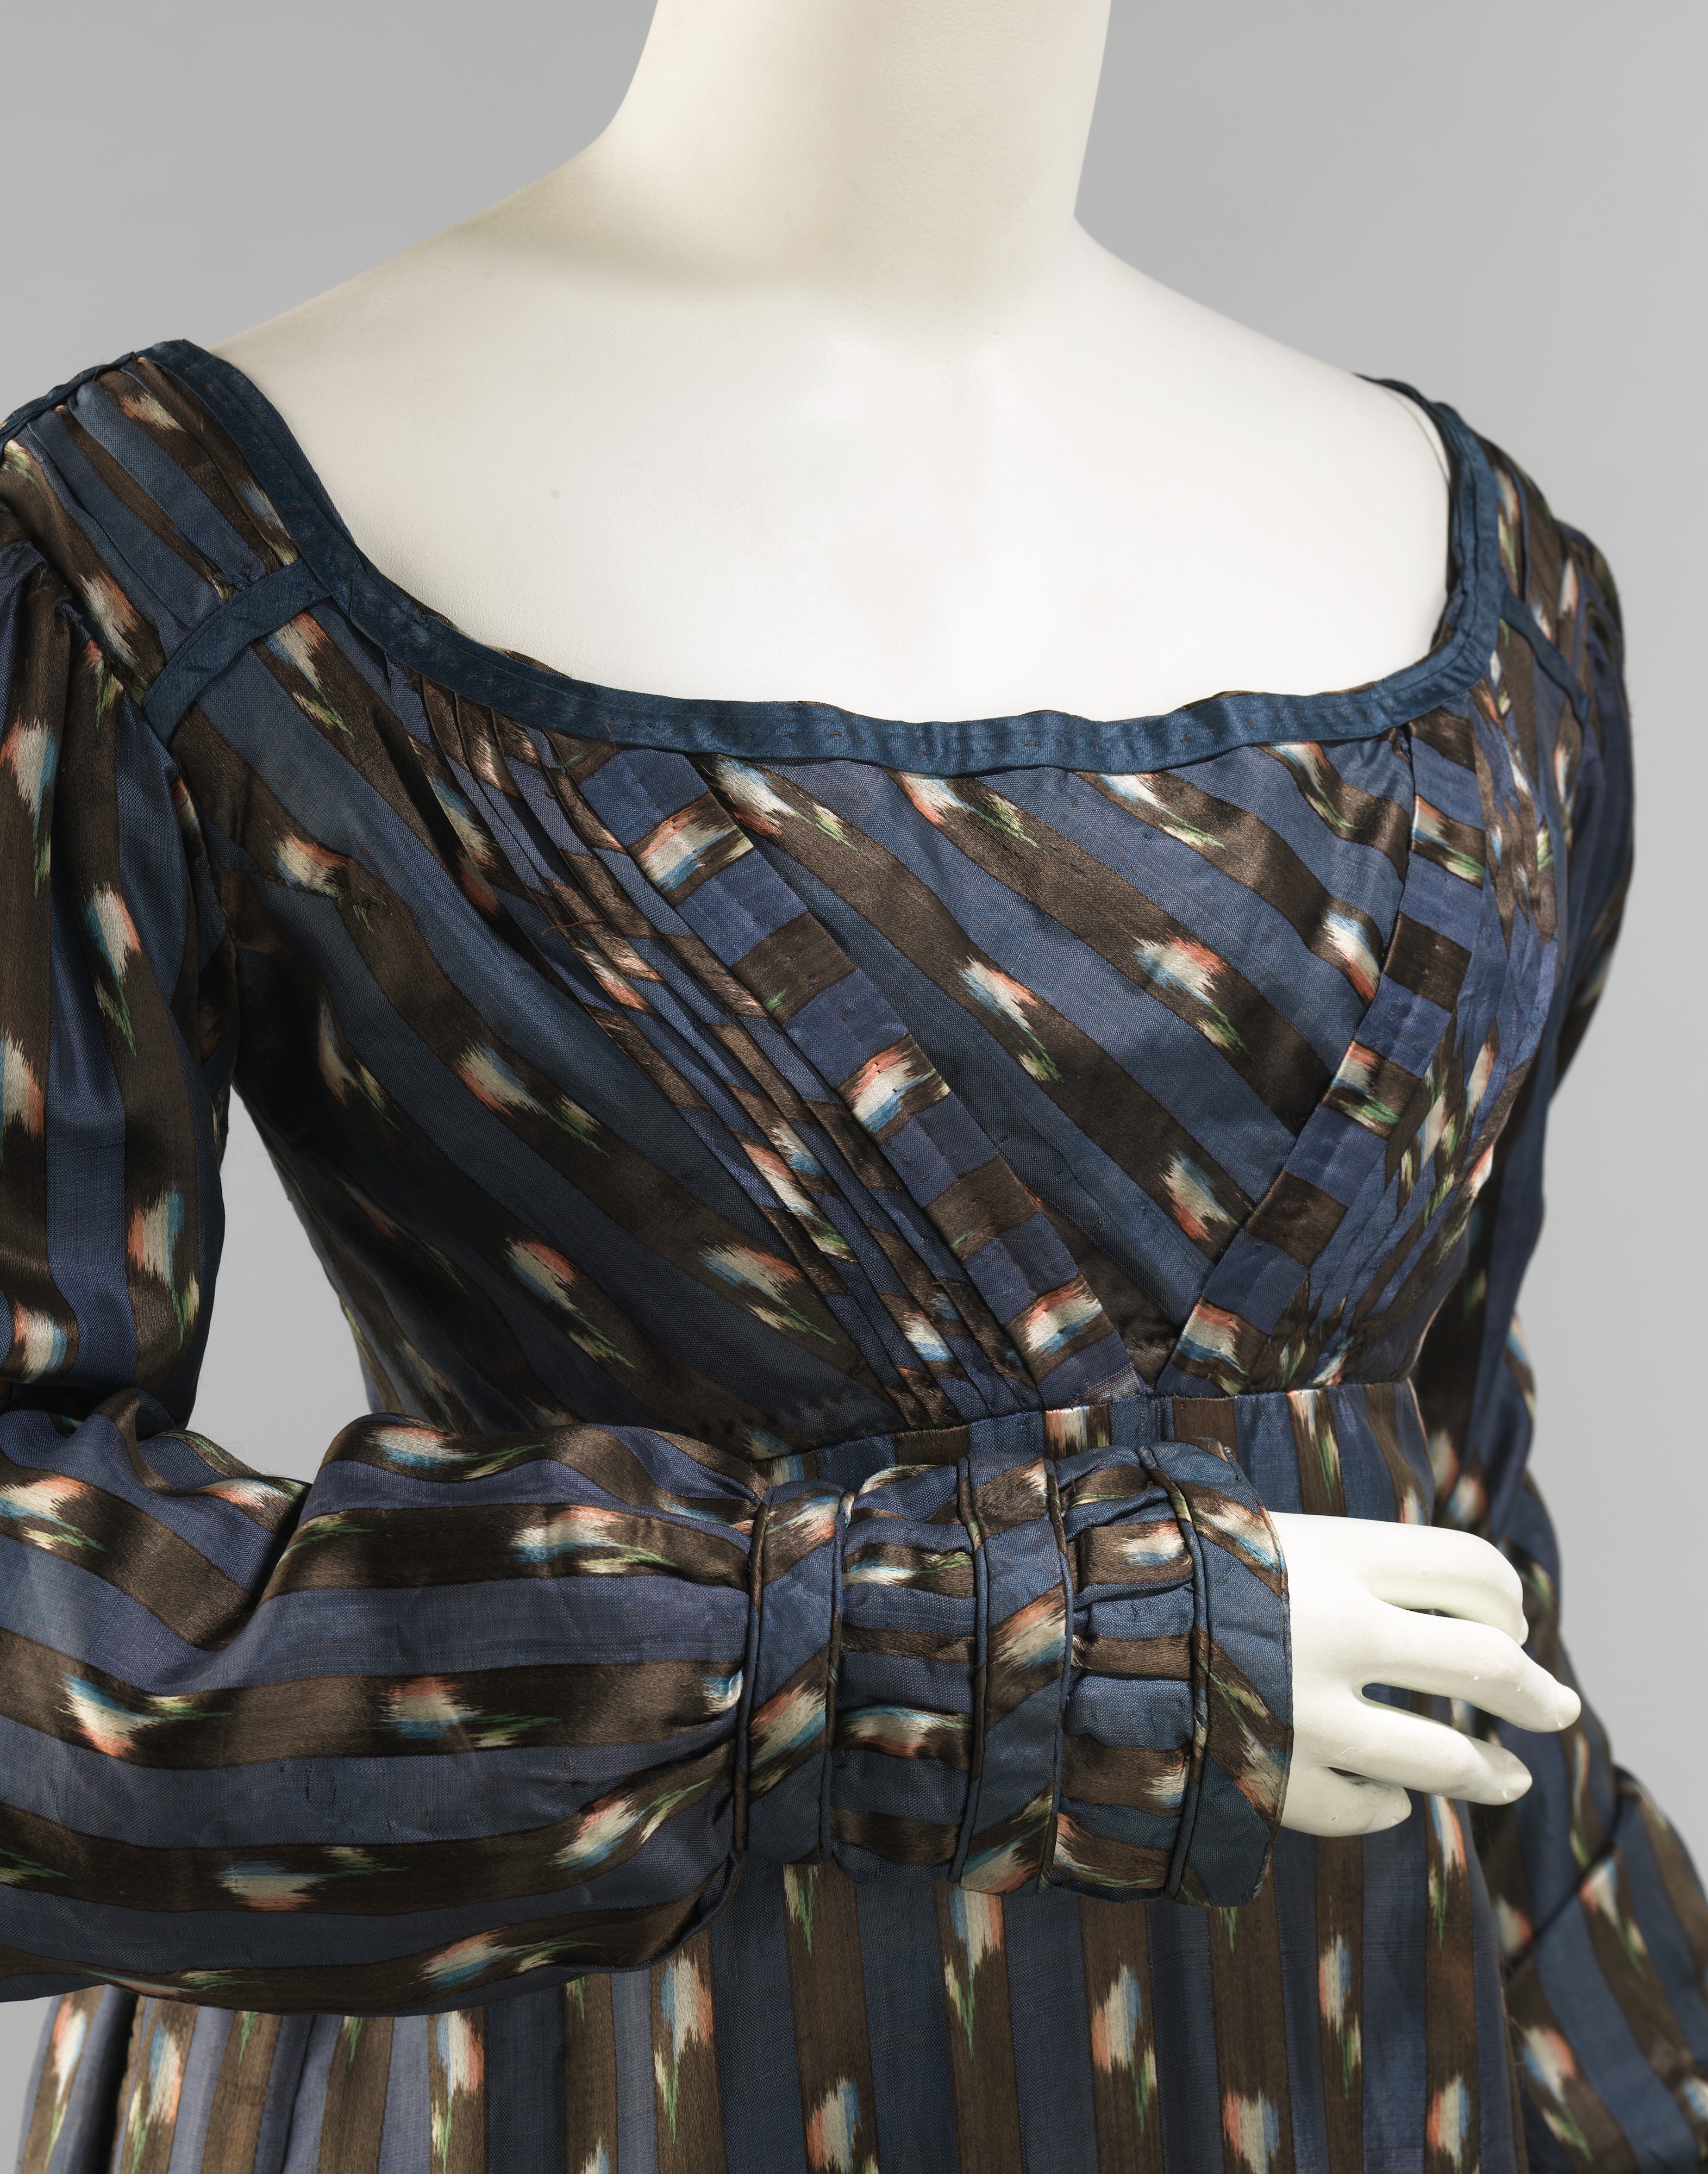 Dinner dress, ca. 1820, British, silk, cotton, Metropolitan Museum of Art, 2009.300.3370